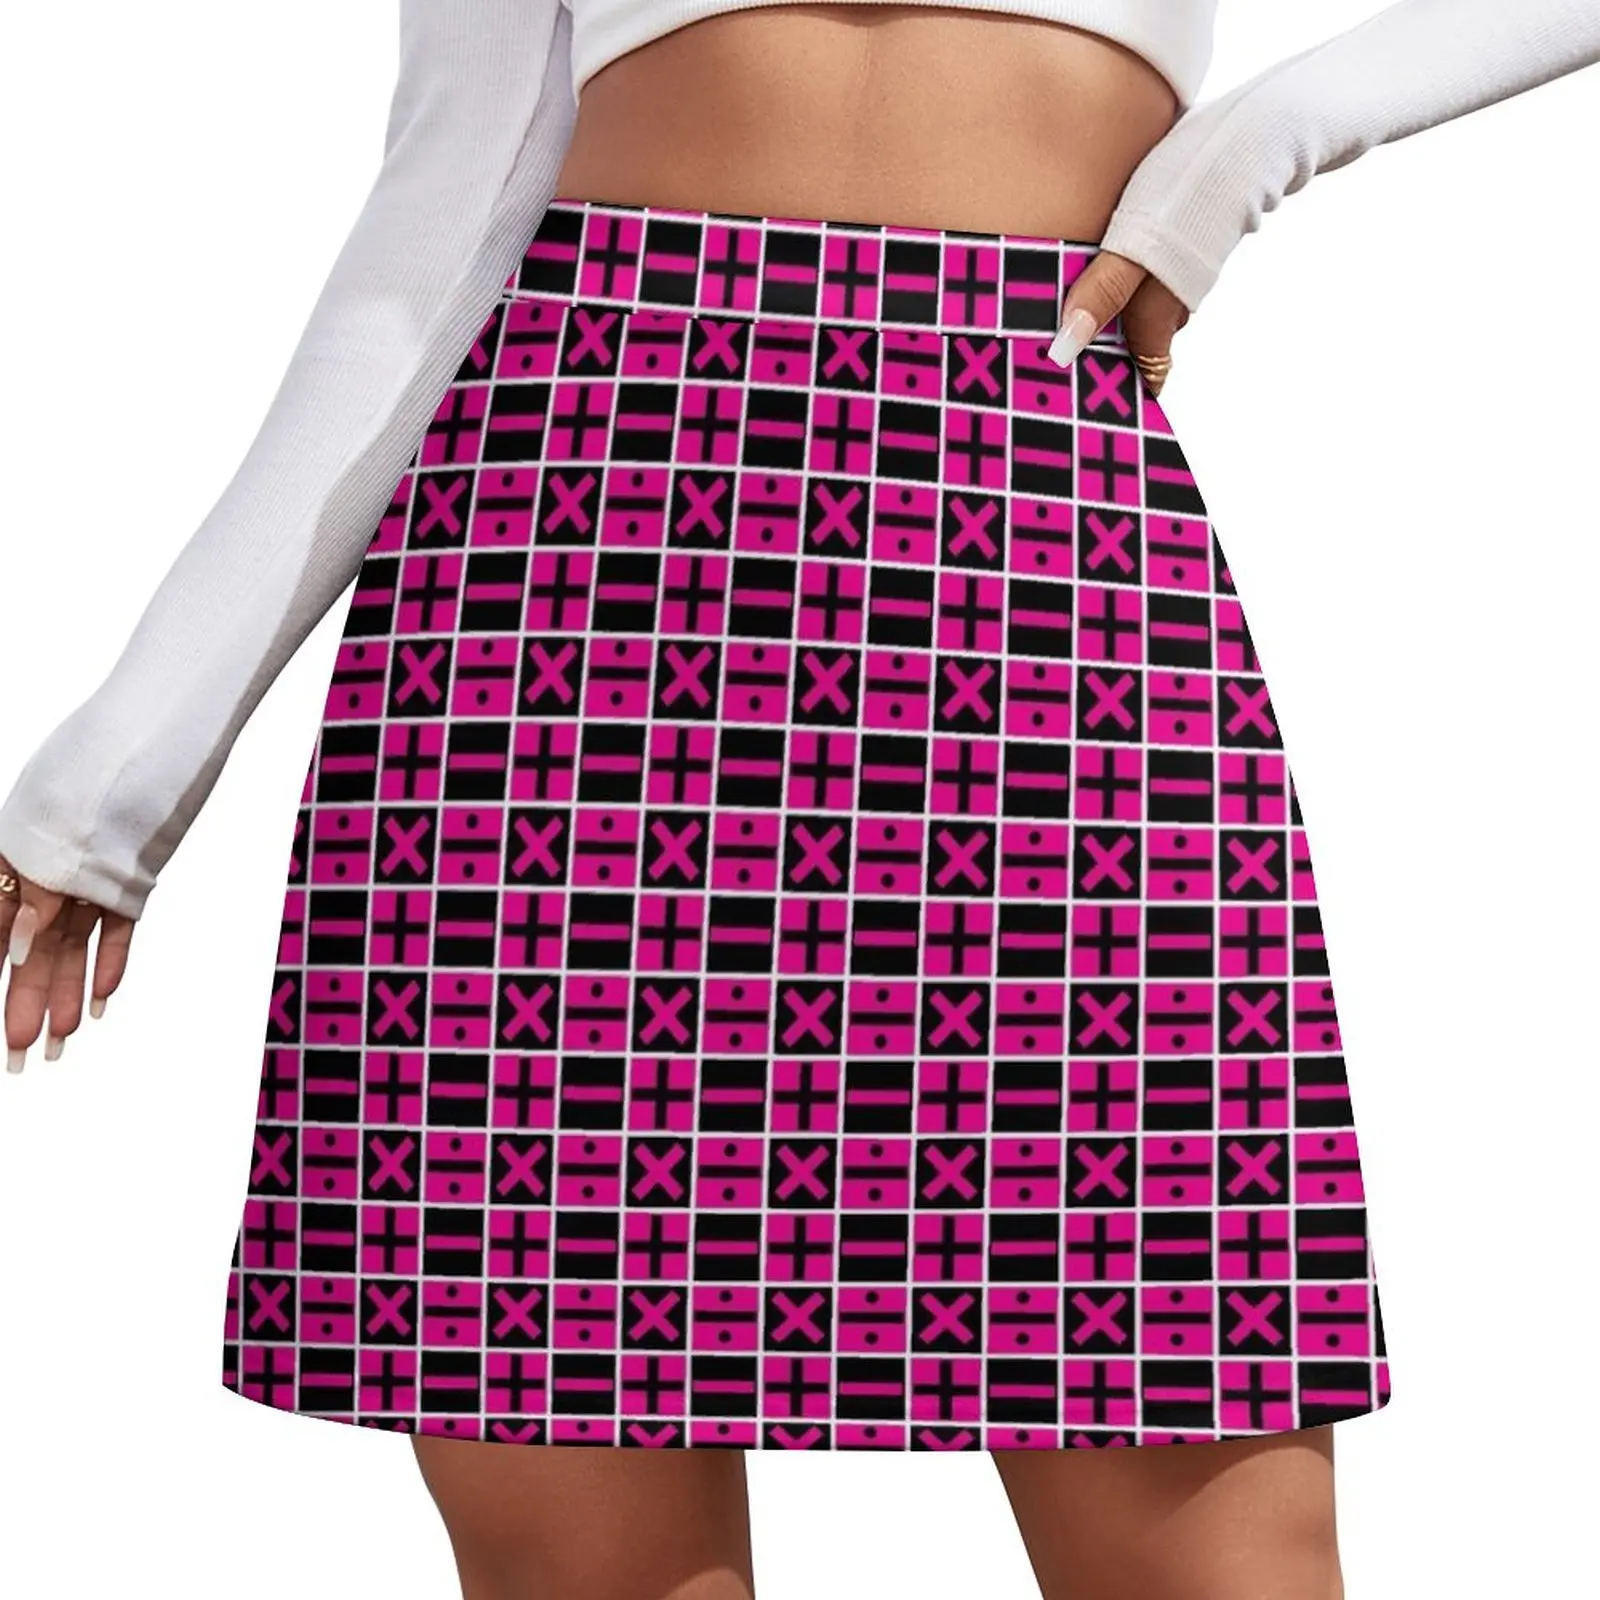 Trish Una pattern Mini Skirt summer skirts cosplay sexy skirt